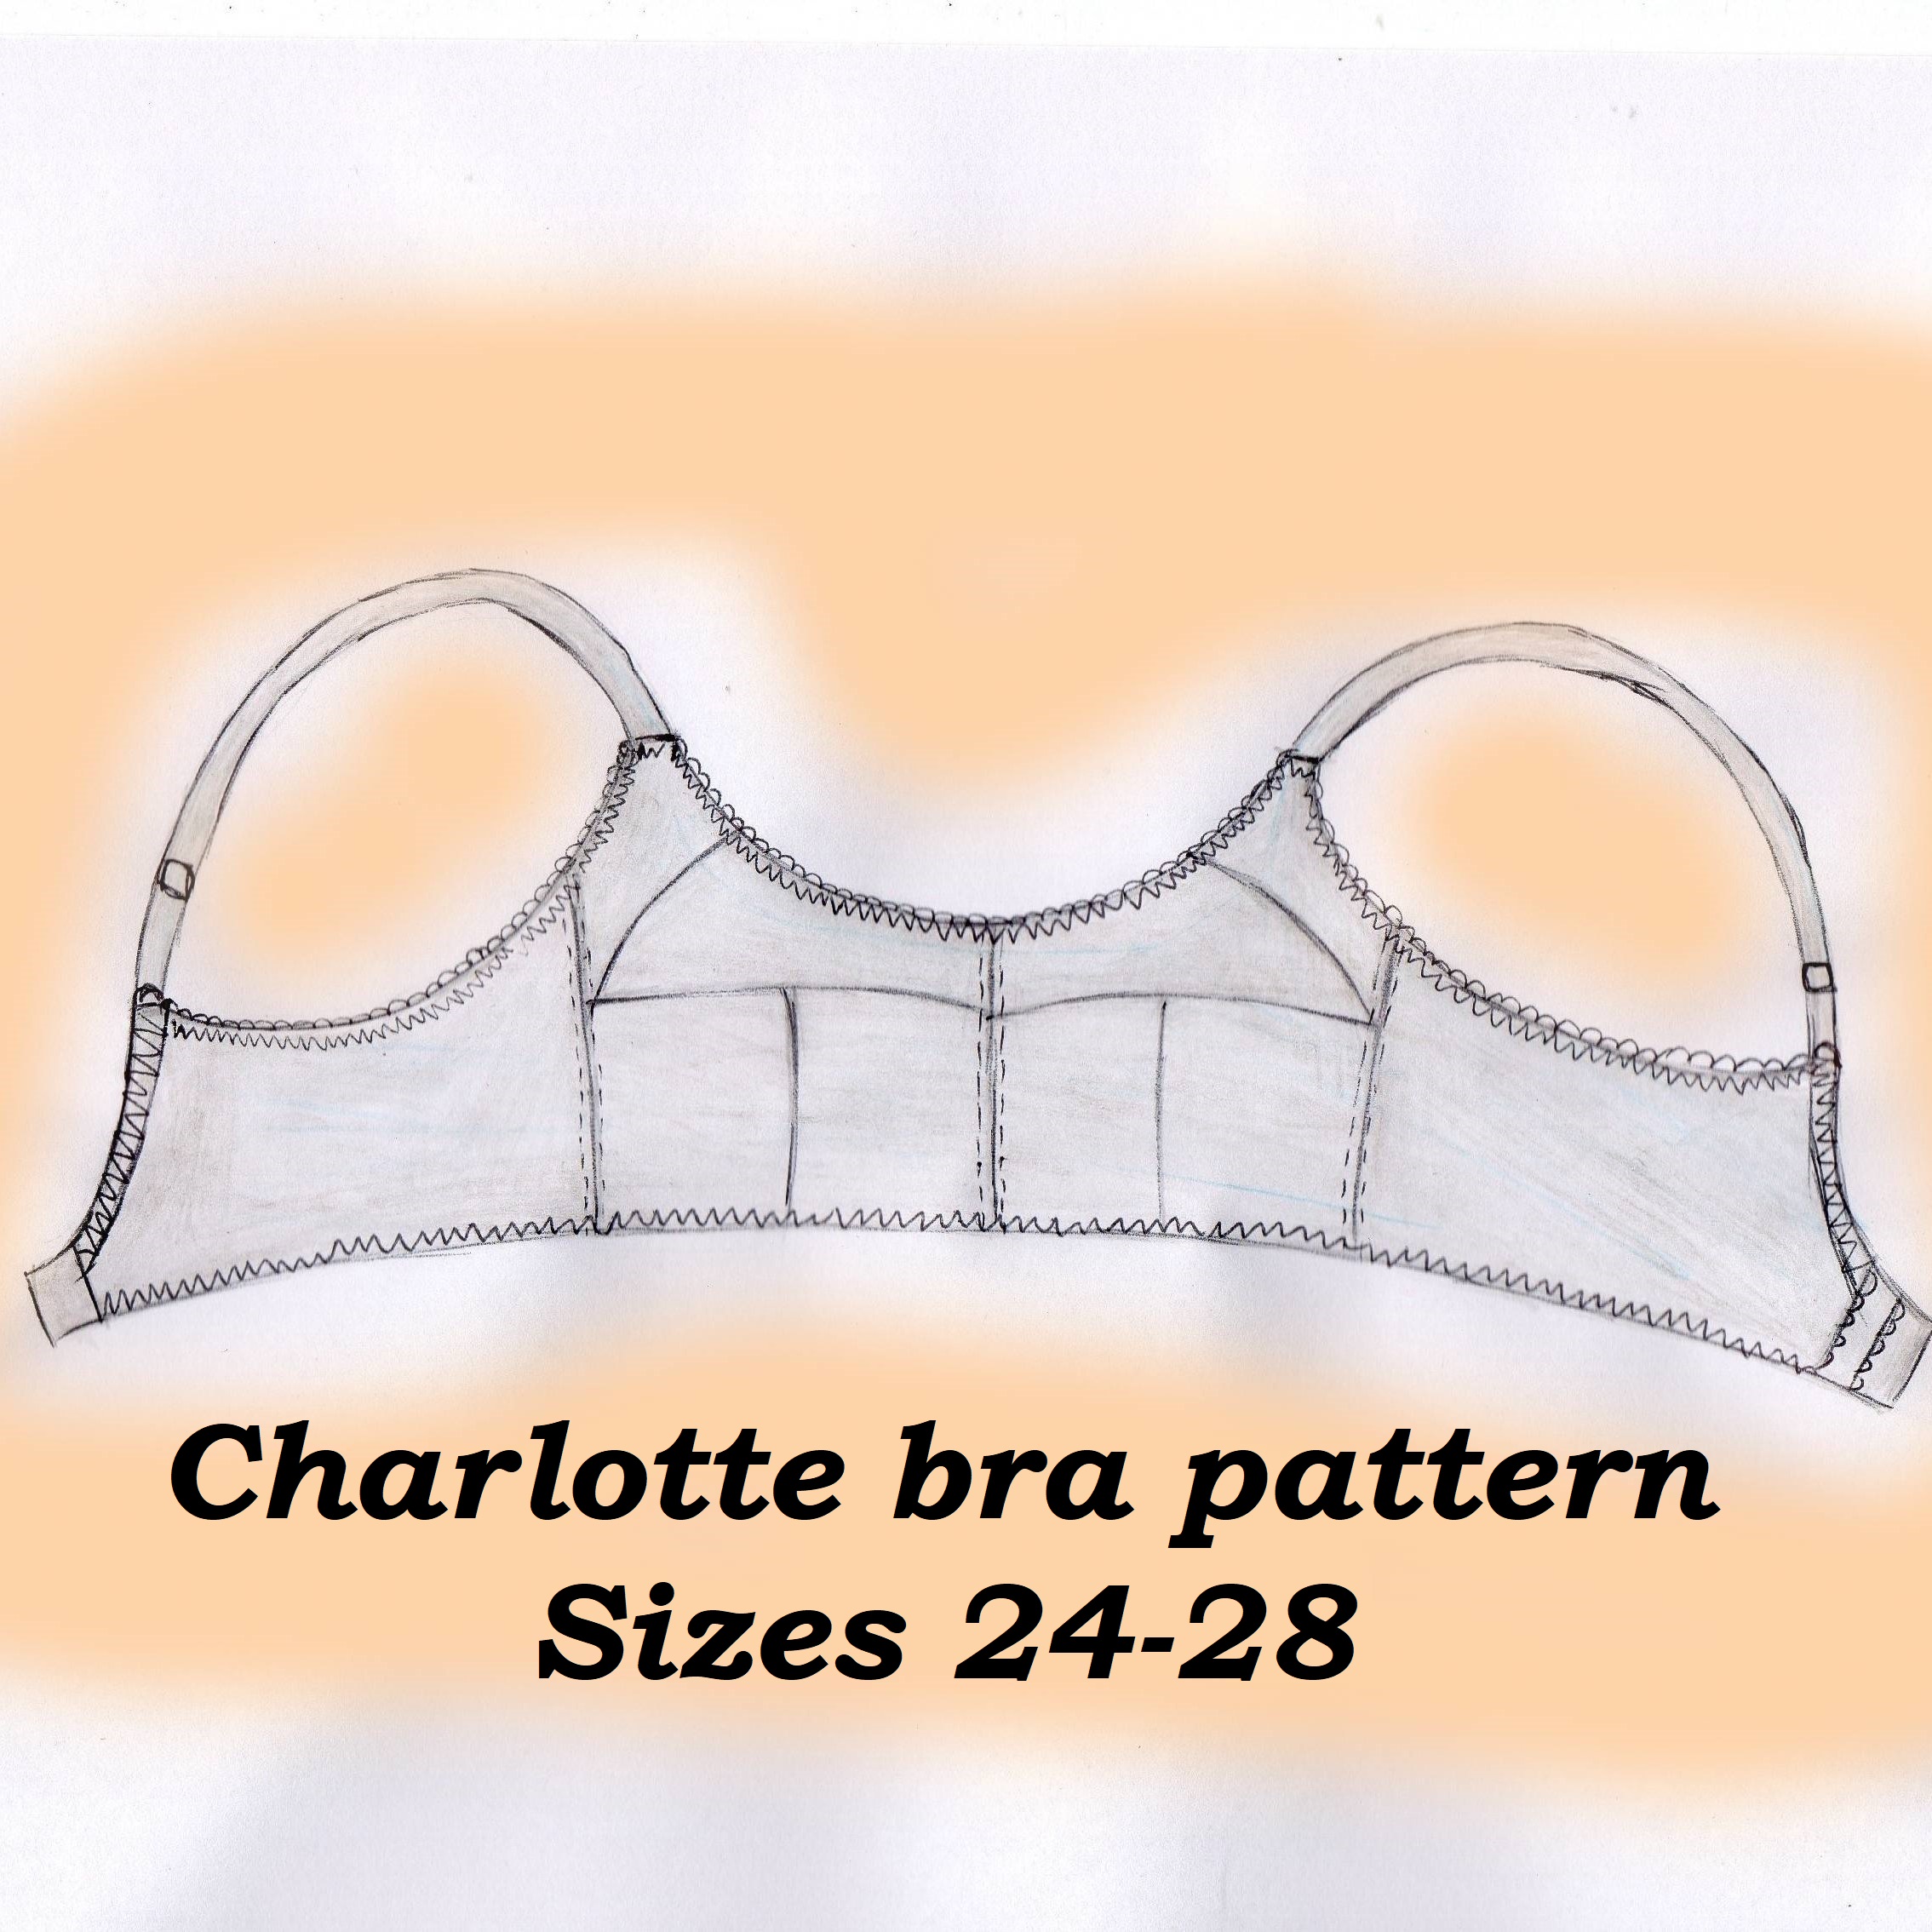 Wireless bra pattern plus size, Charlotte, Sizes 24-28